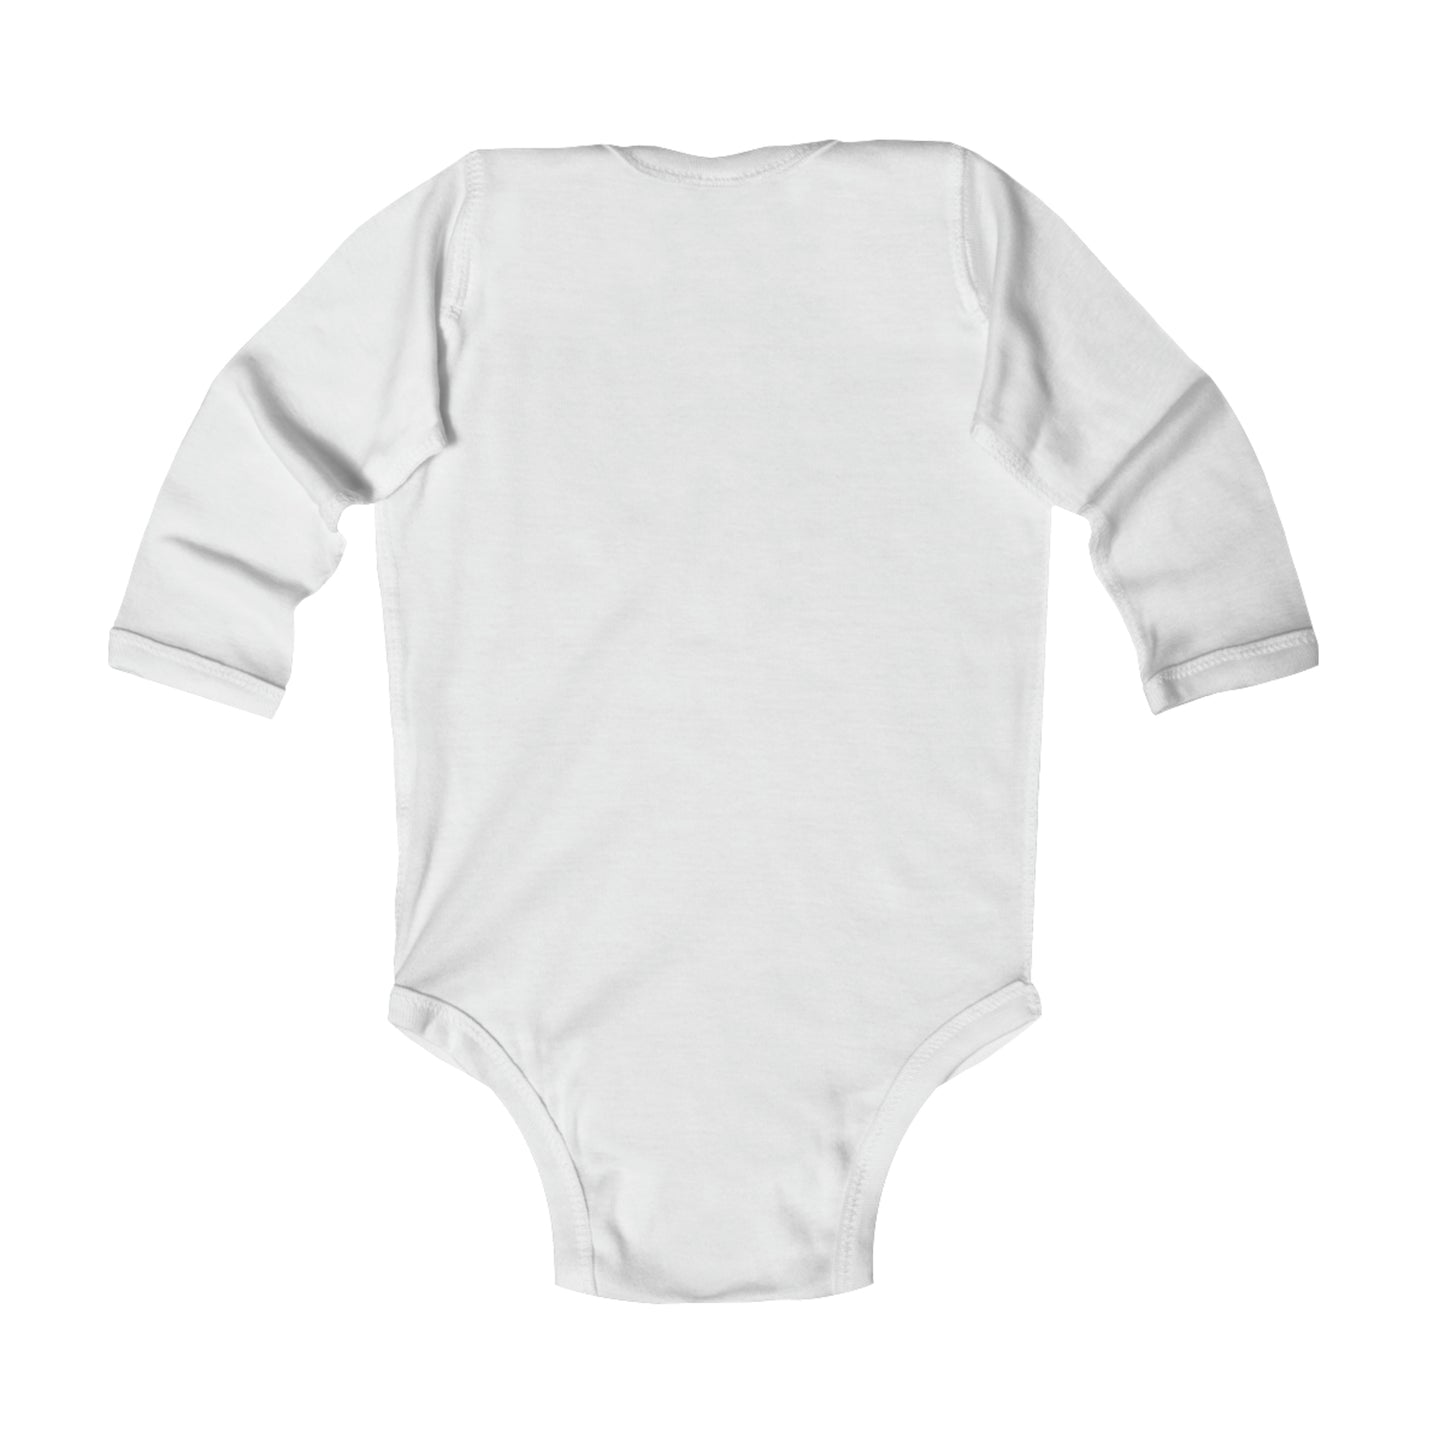 Infant Long Sleeve Bodysuit, "Believe in the magic"